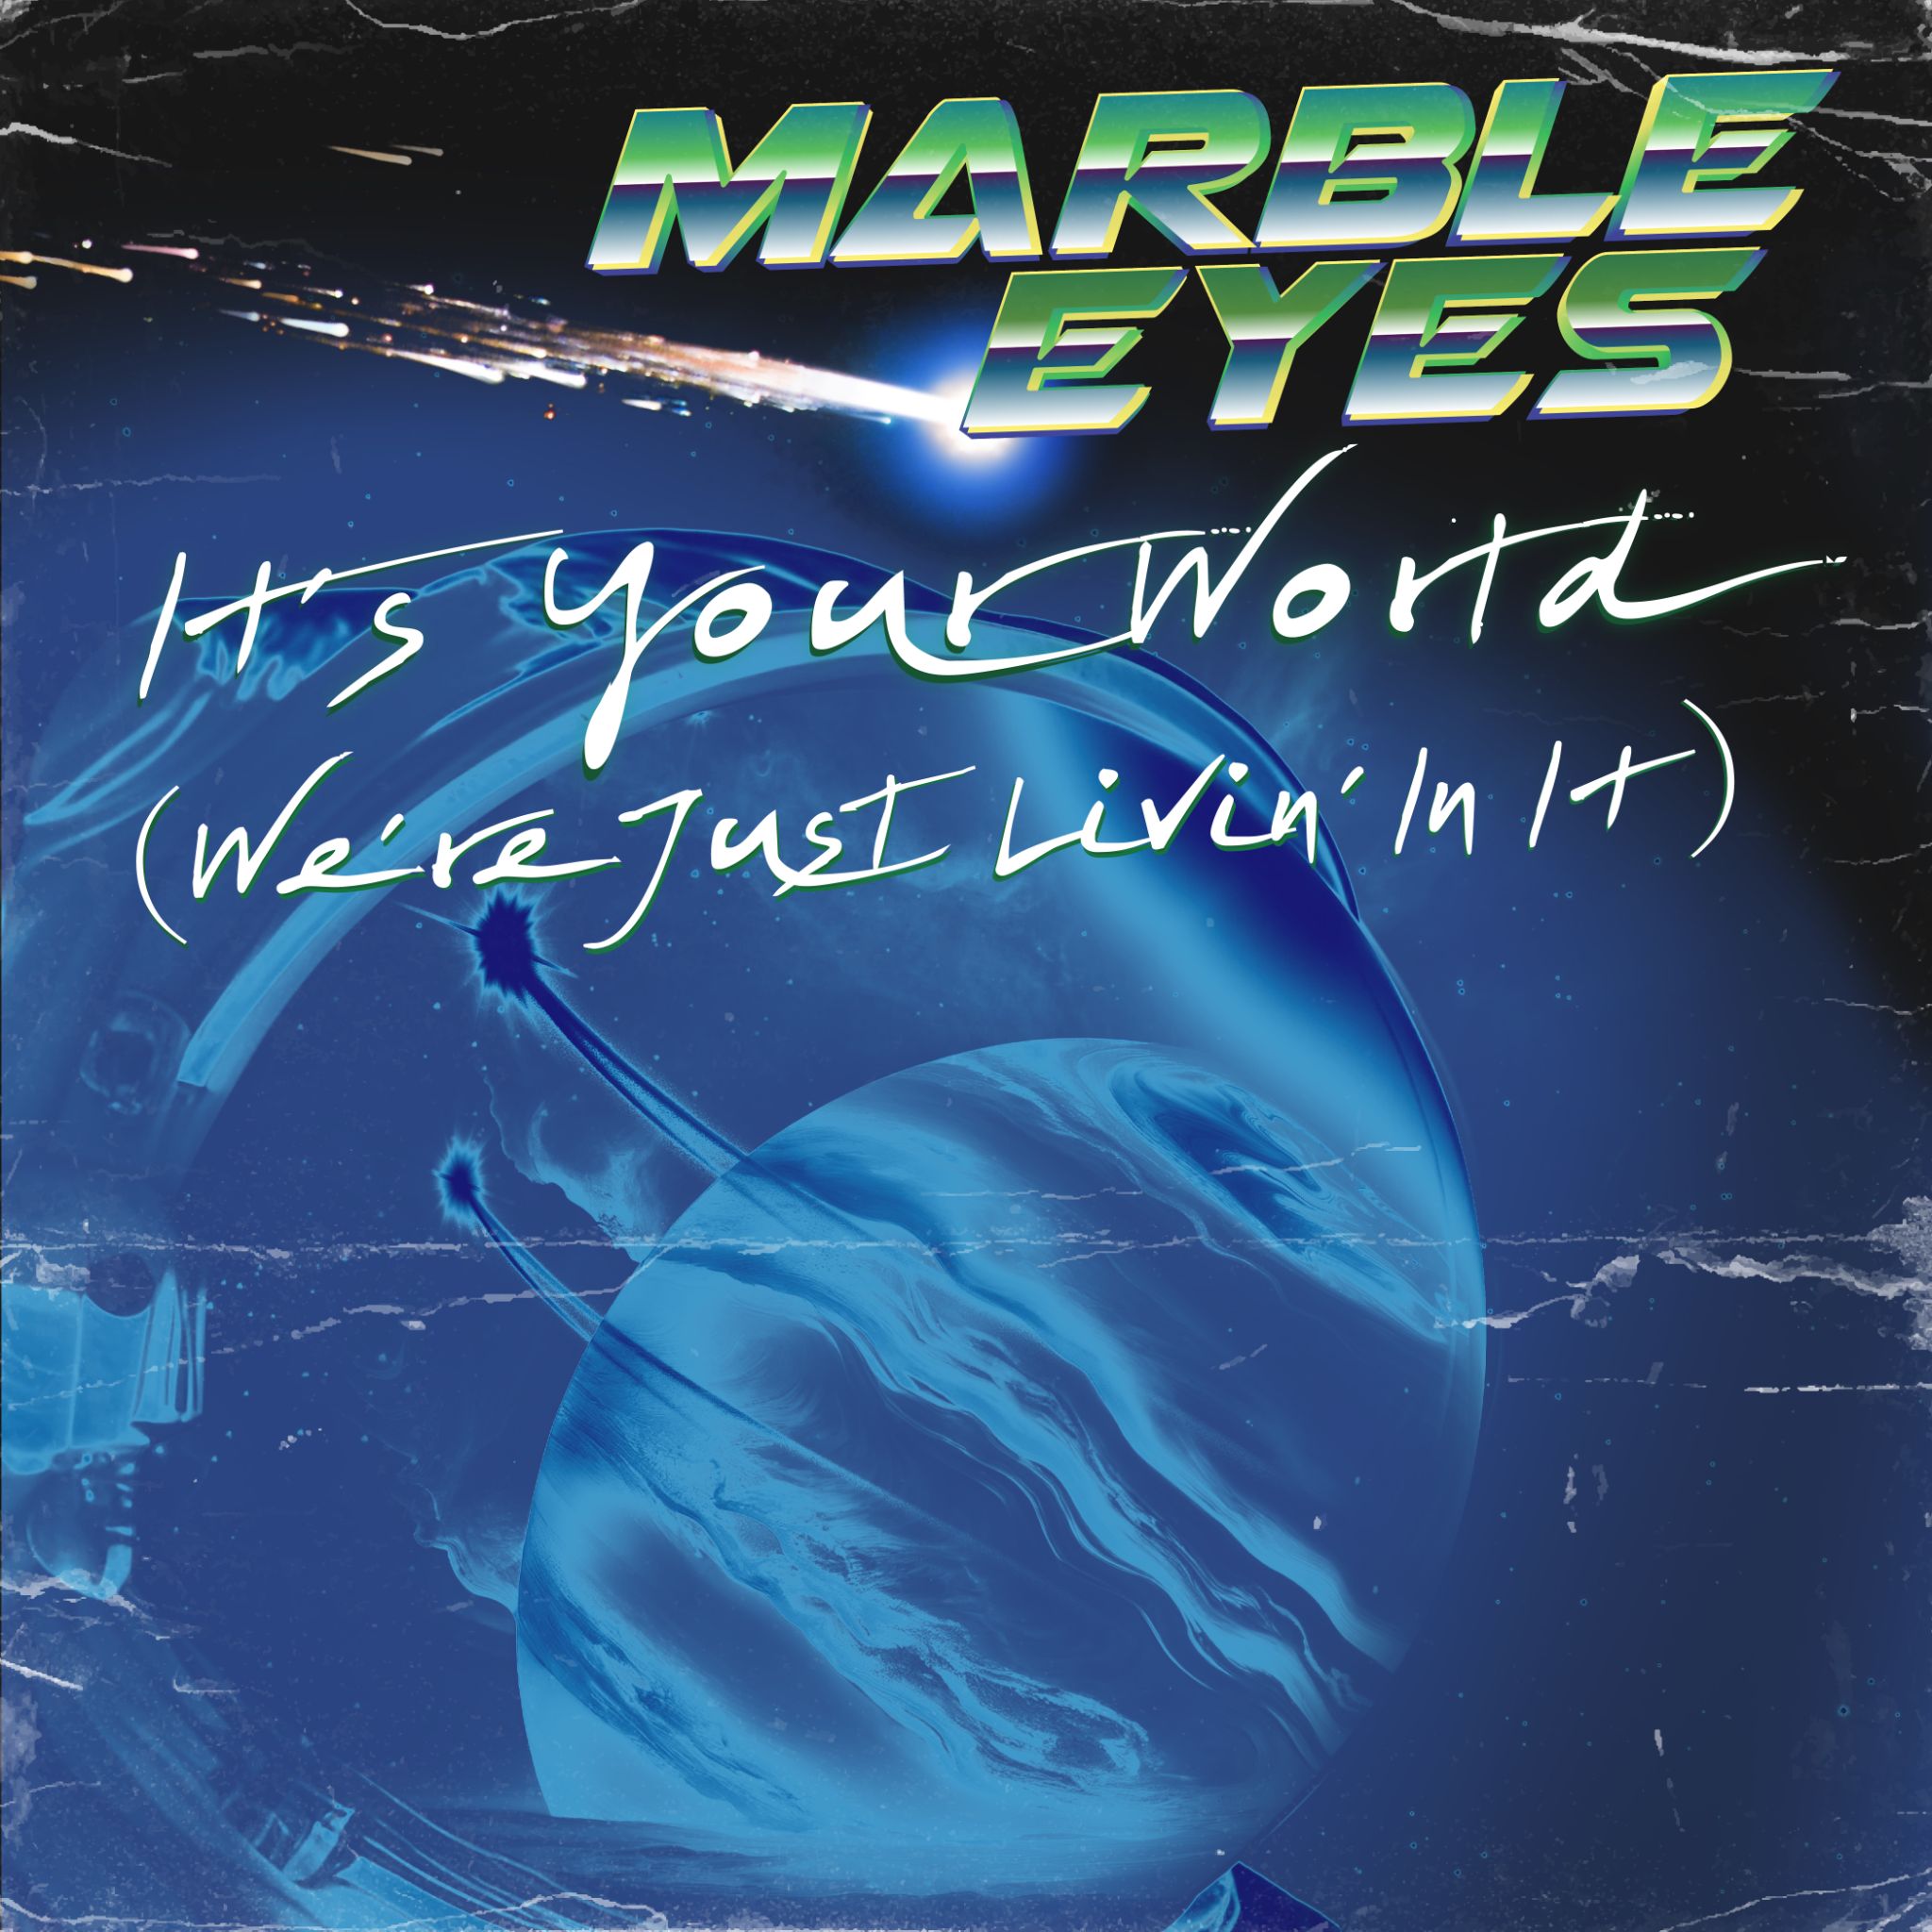 MARBLE EYES RELEASES JOYFUL SINGLE “IT’S YOUR WORLD”